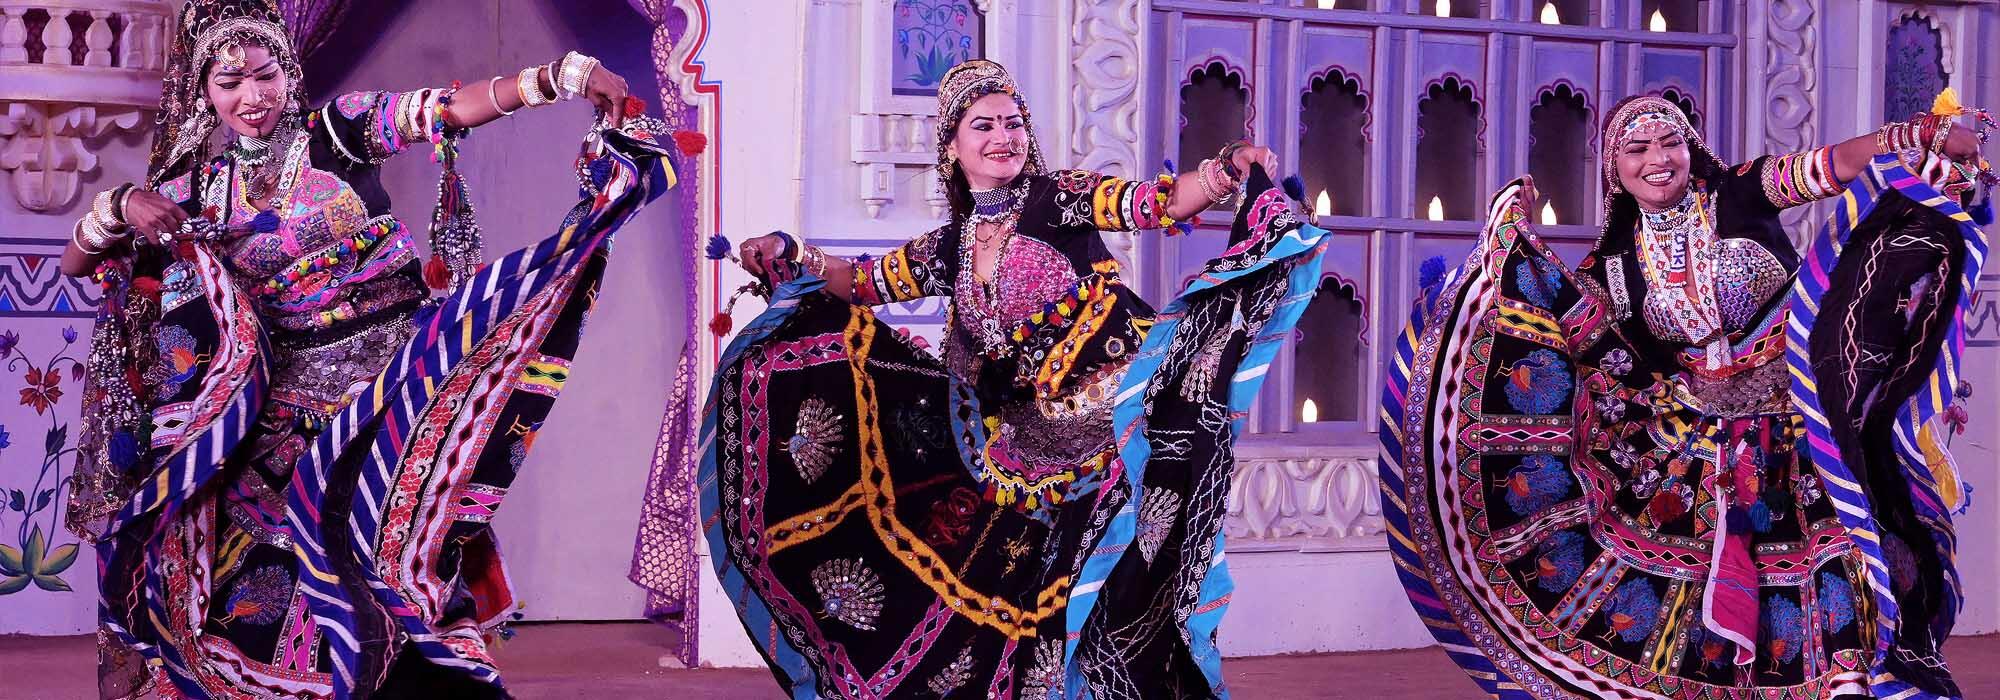 Kalbelia, traditional folk dance of Rajasthan